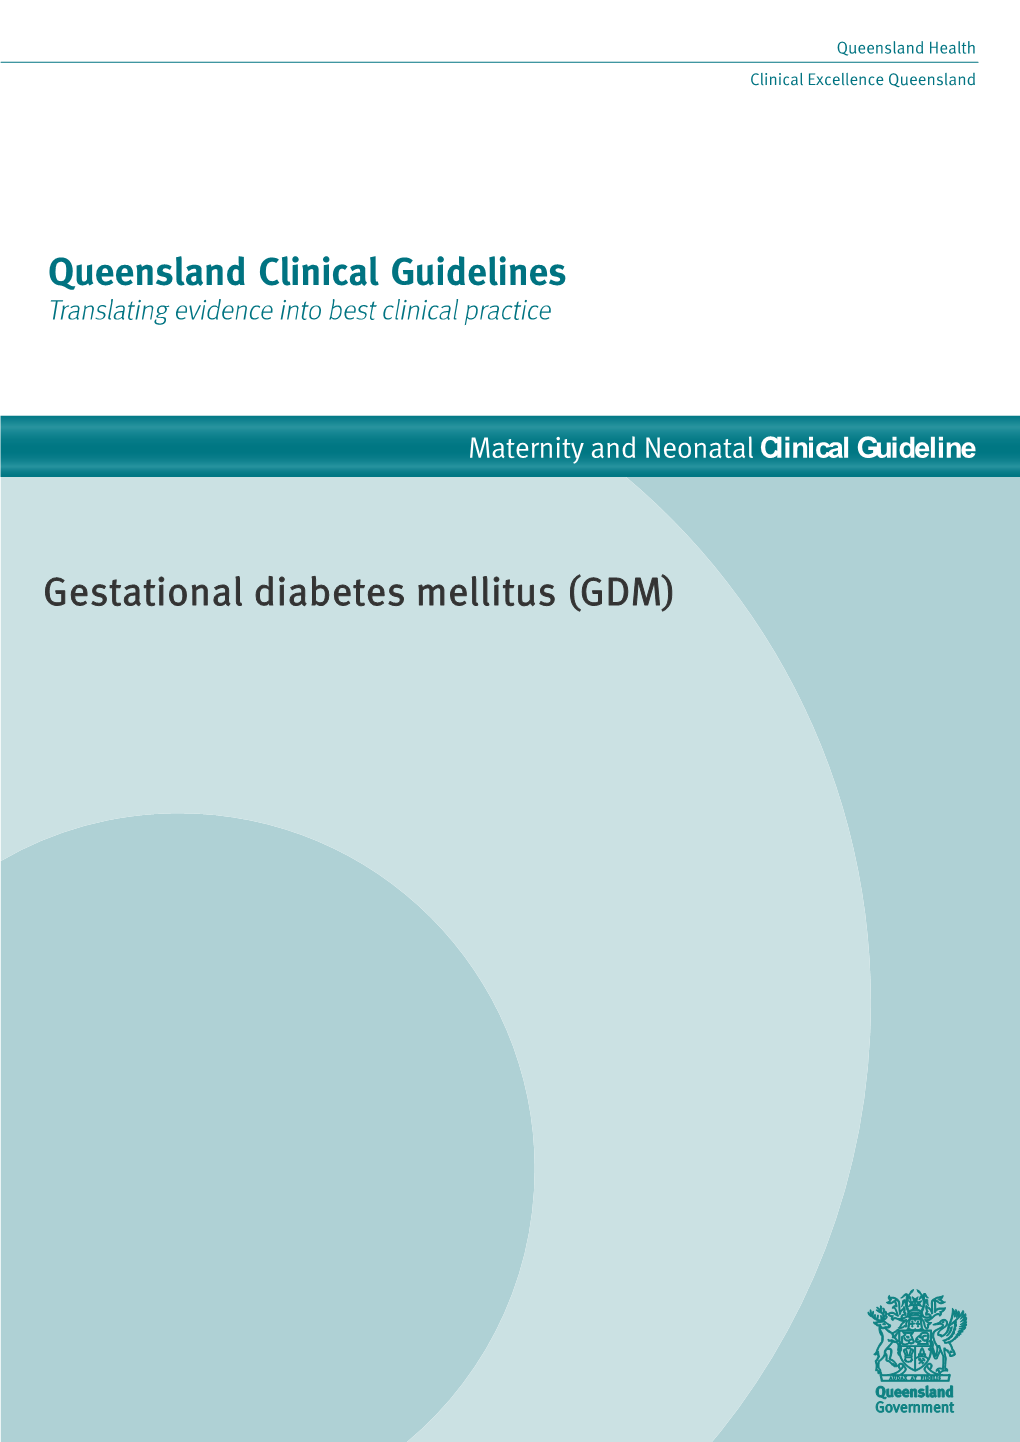 Guideline: Gestational Diabetes Mellitus (GDM)